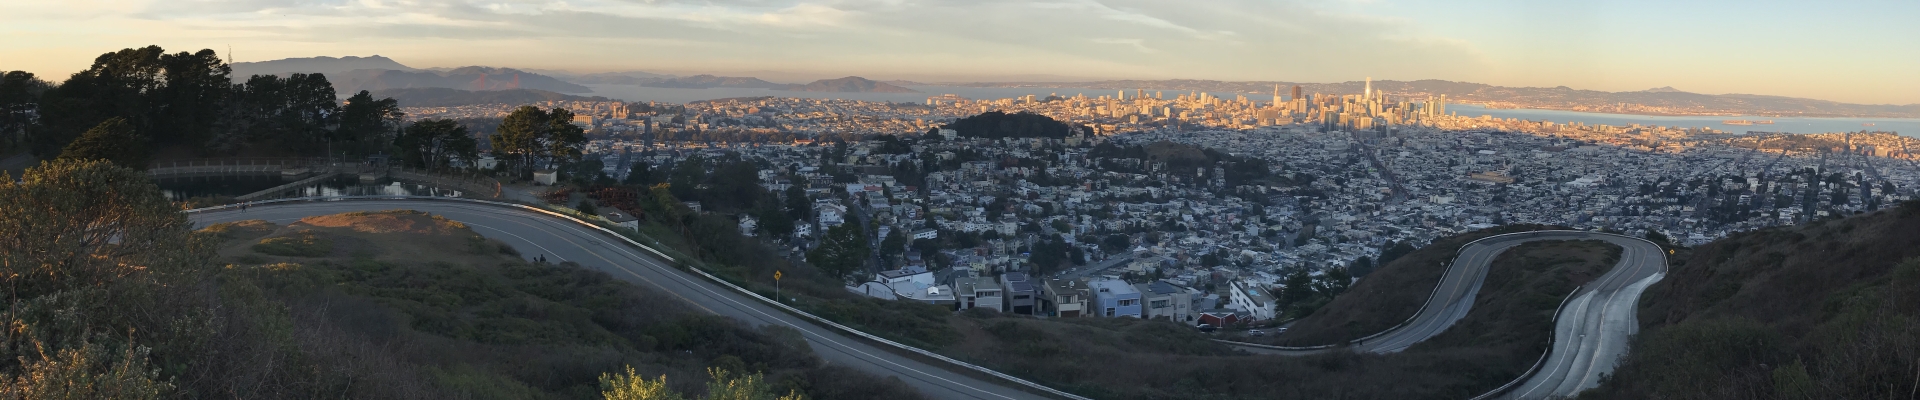 San Francisco Vista